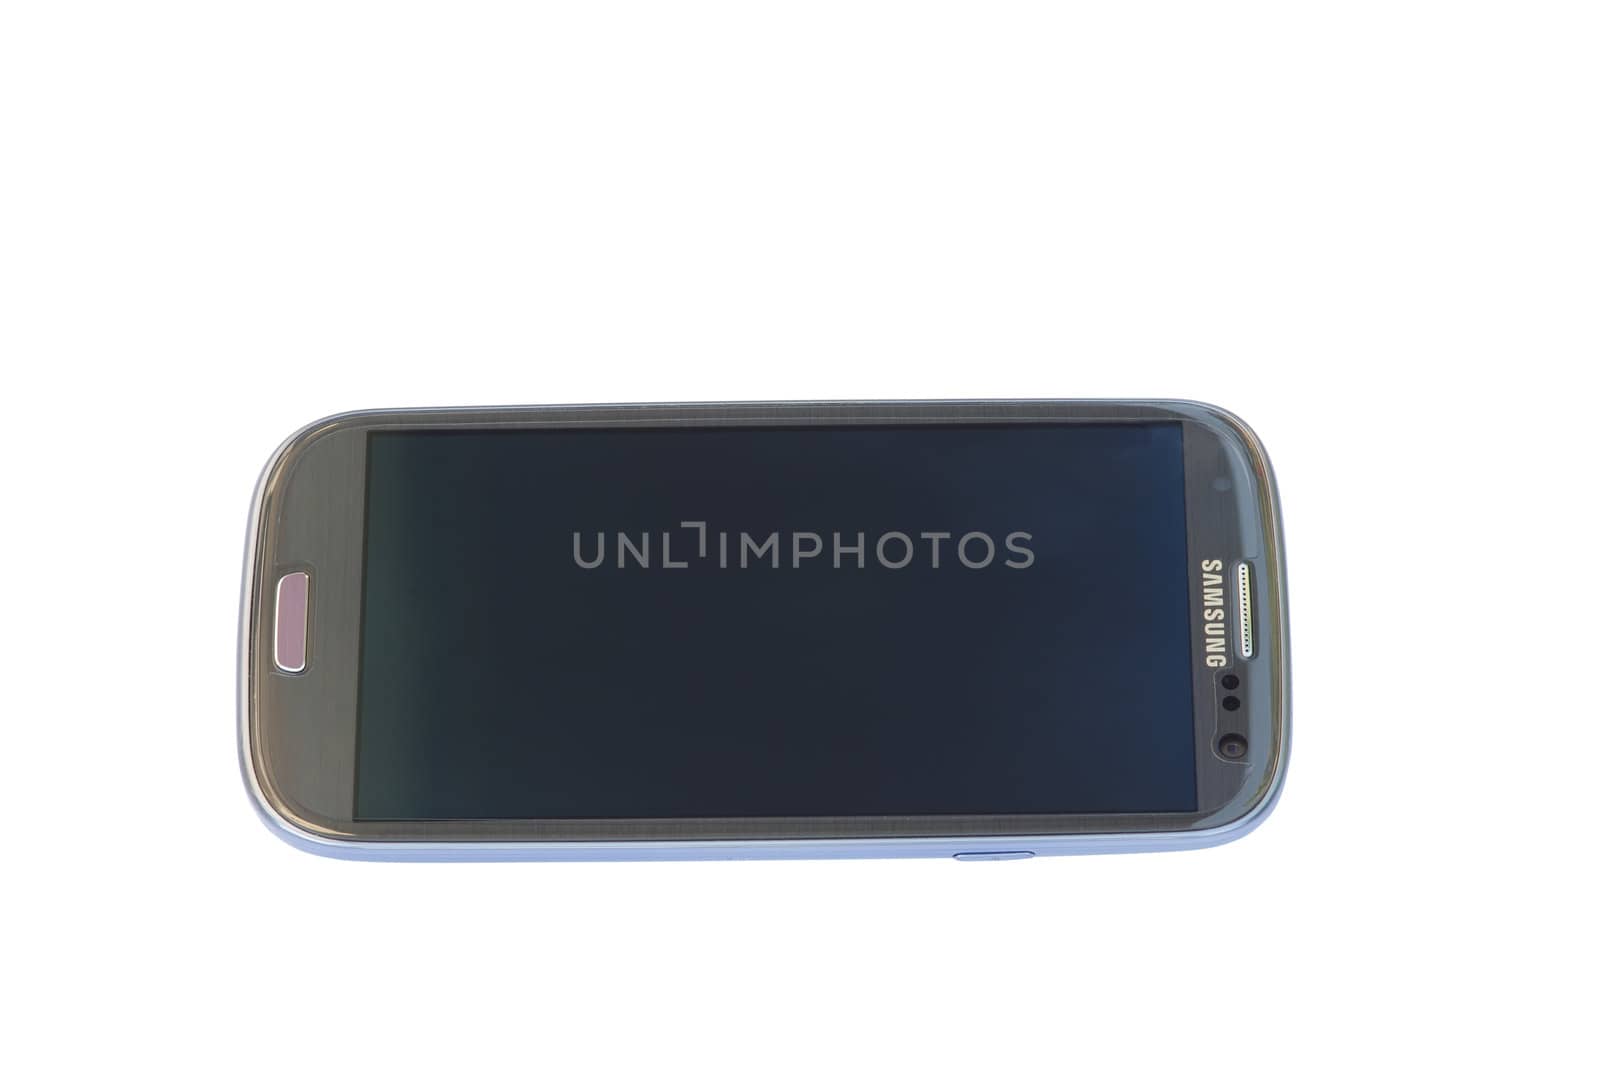 Samsung Galaxy SIII on a white background